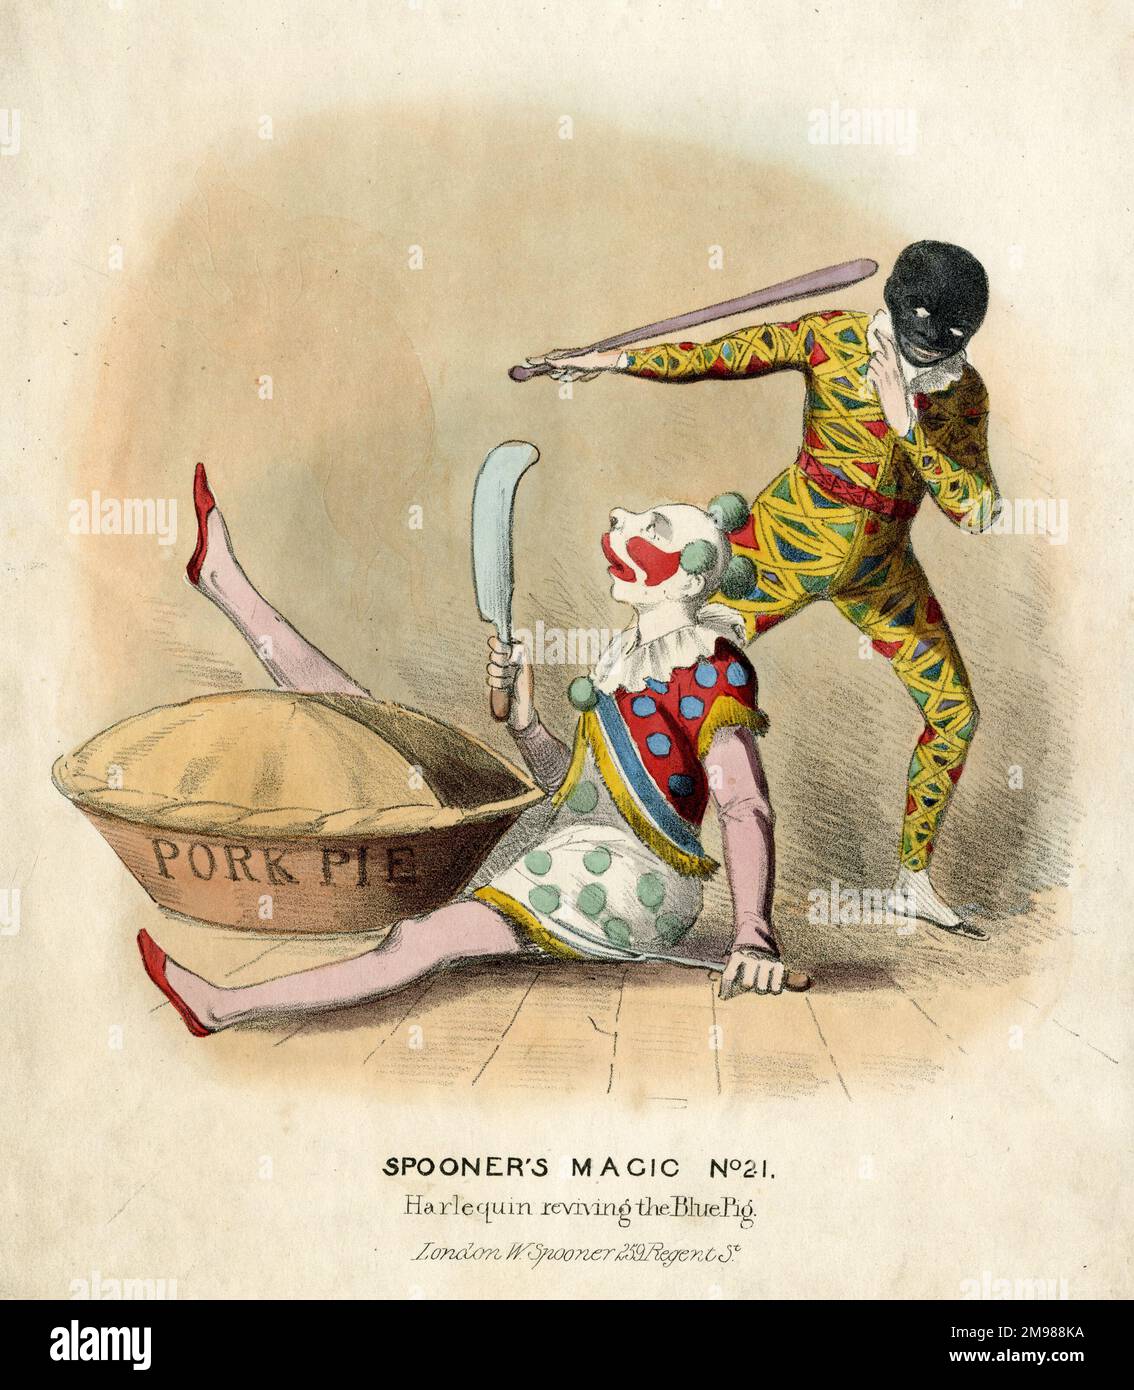 Spooner's Magic No. 21 - Harlequin reviving the Blue Pig Stock Photo